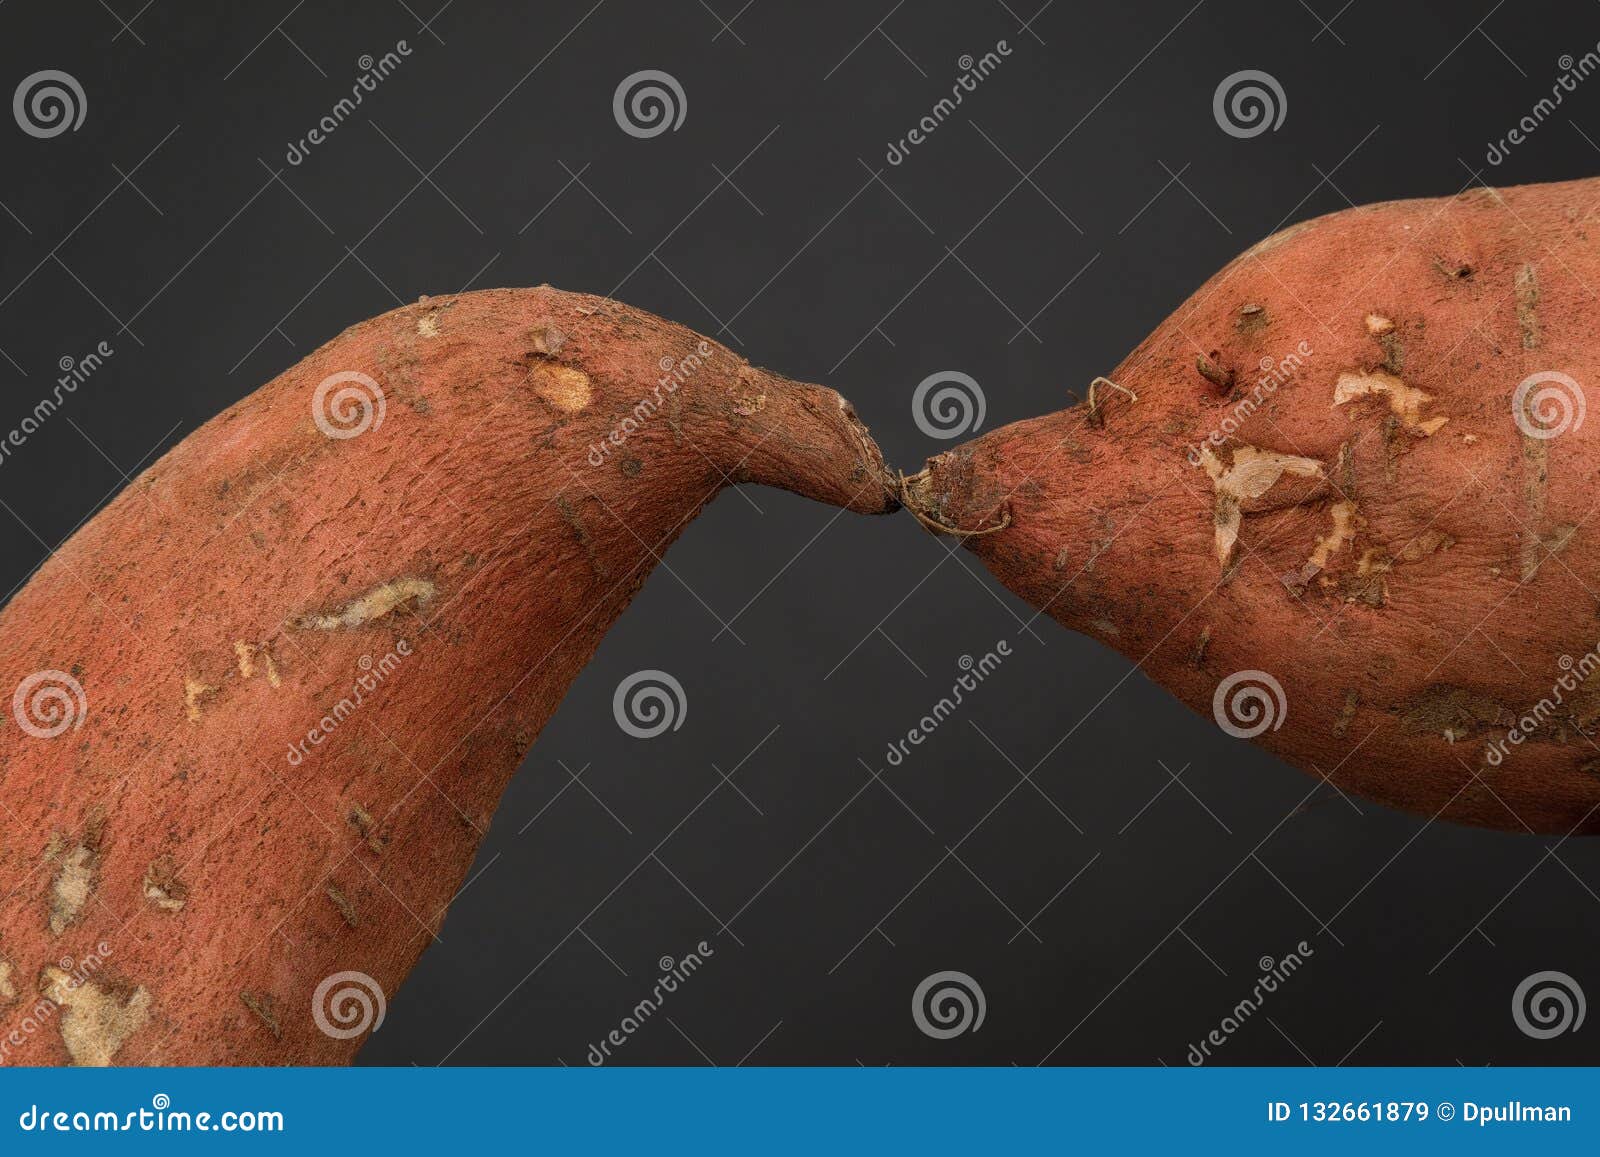 Two Sweet Potatoes Kissing Stock Image Image Of Freshness